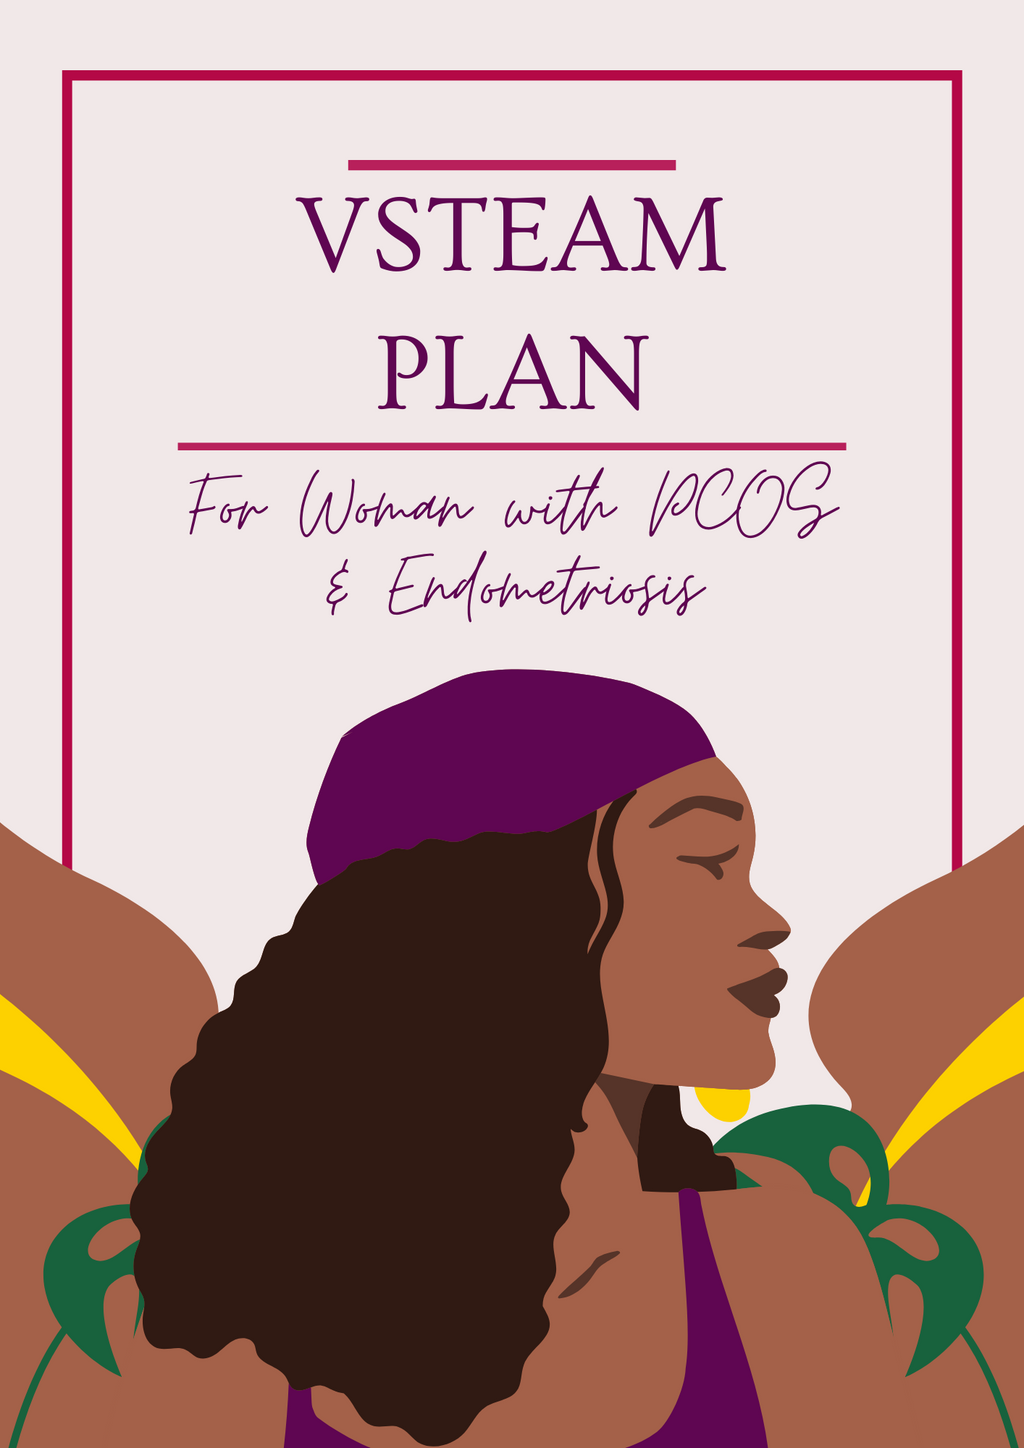 V-Steam Plan For Women With PCOS & Endometriosis